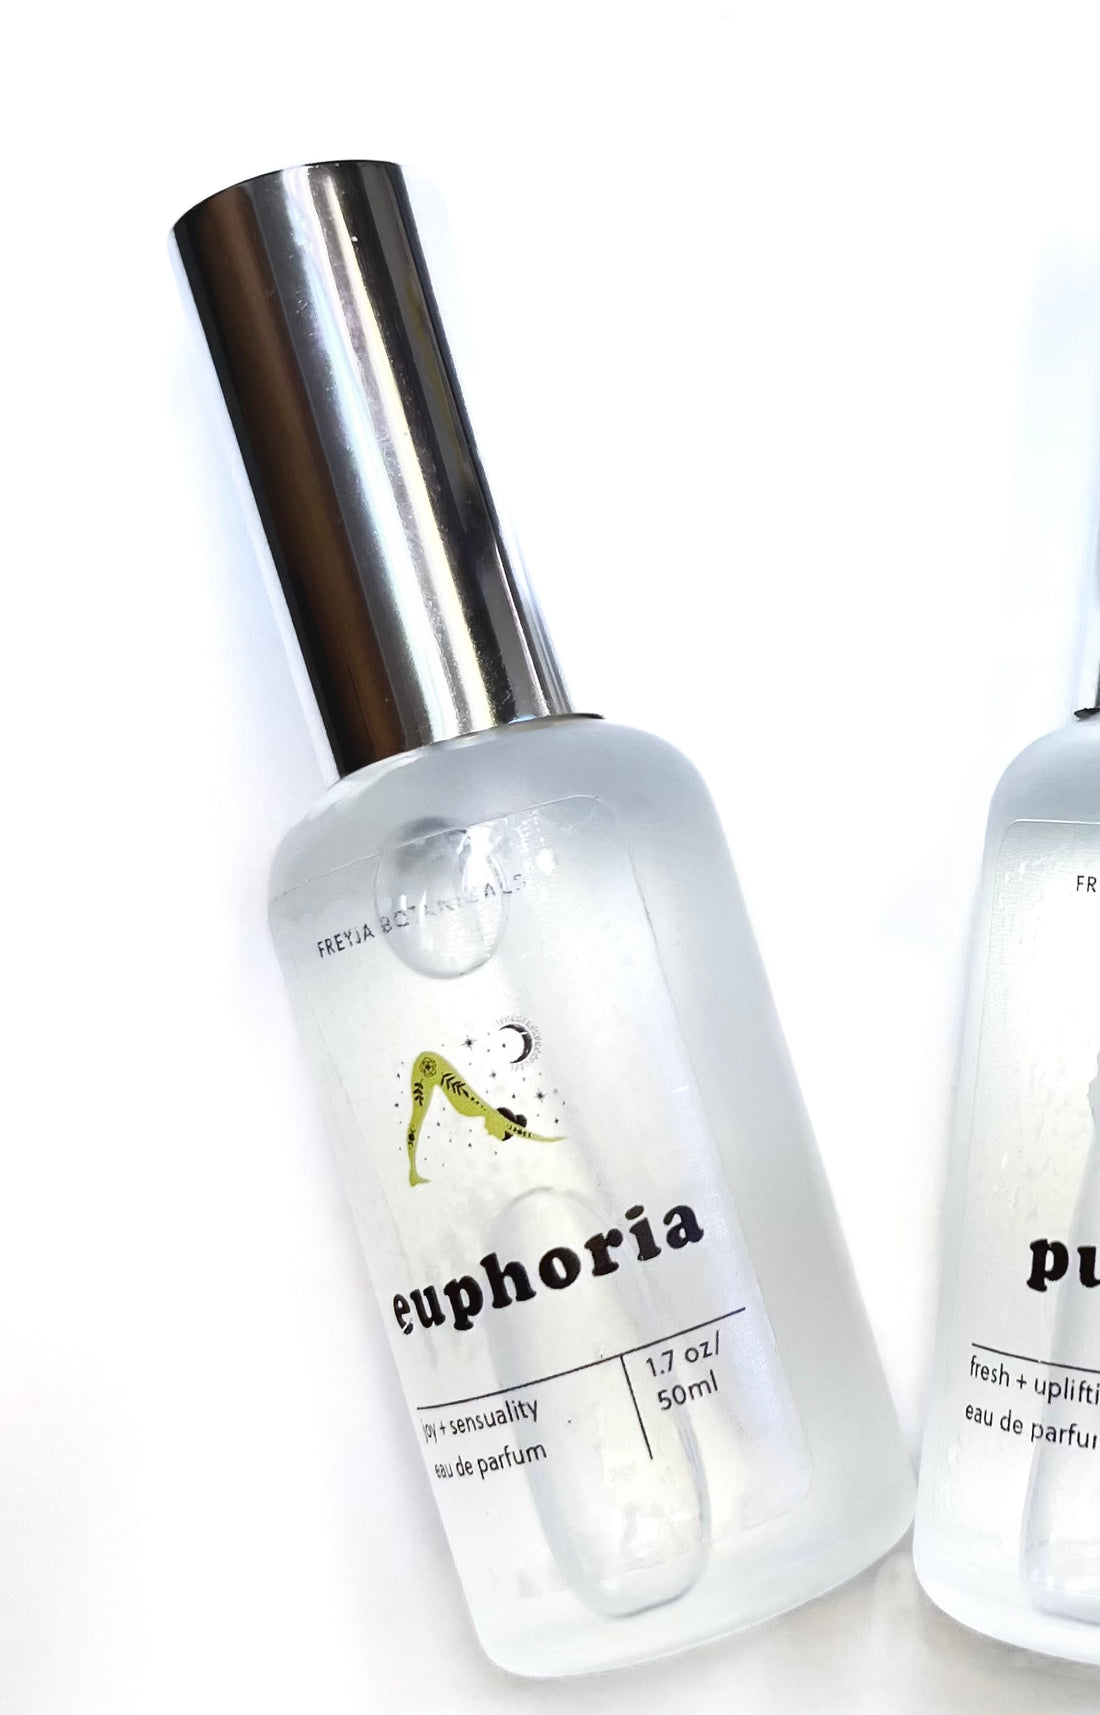 Euphoria | Clean Perfume | Natural Eau De Parfum Essential Oil Based